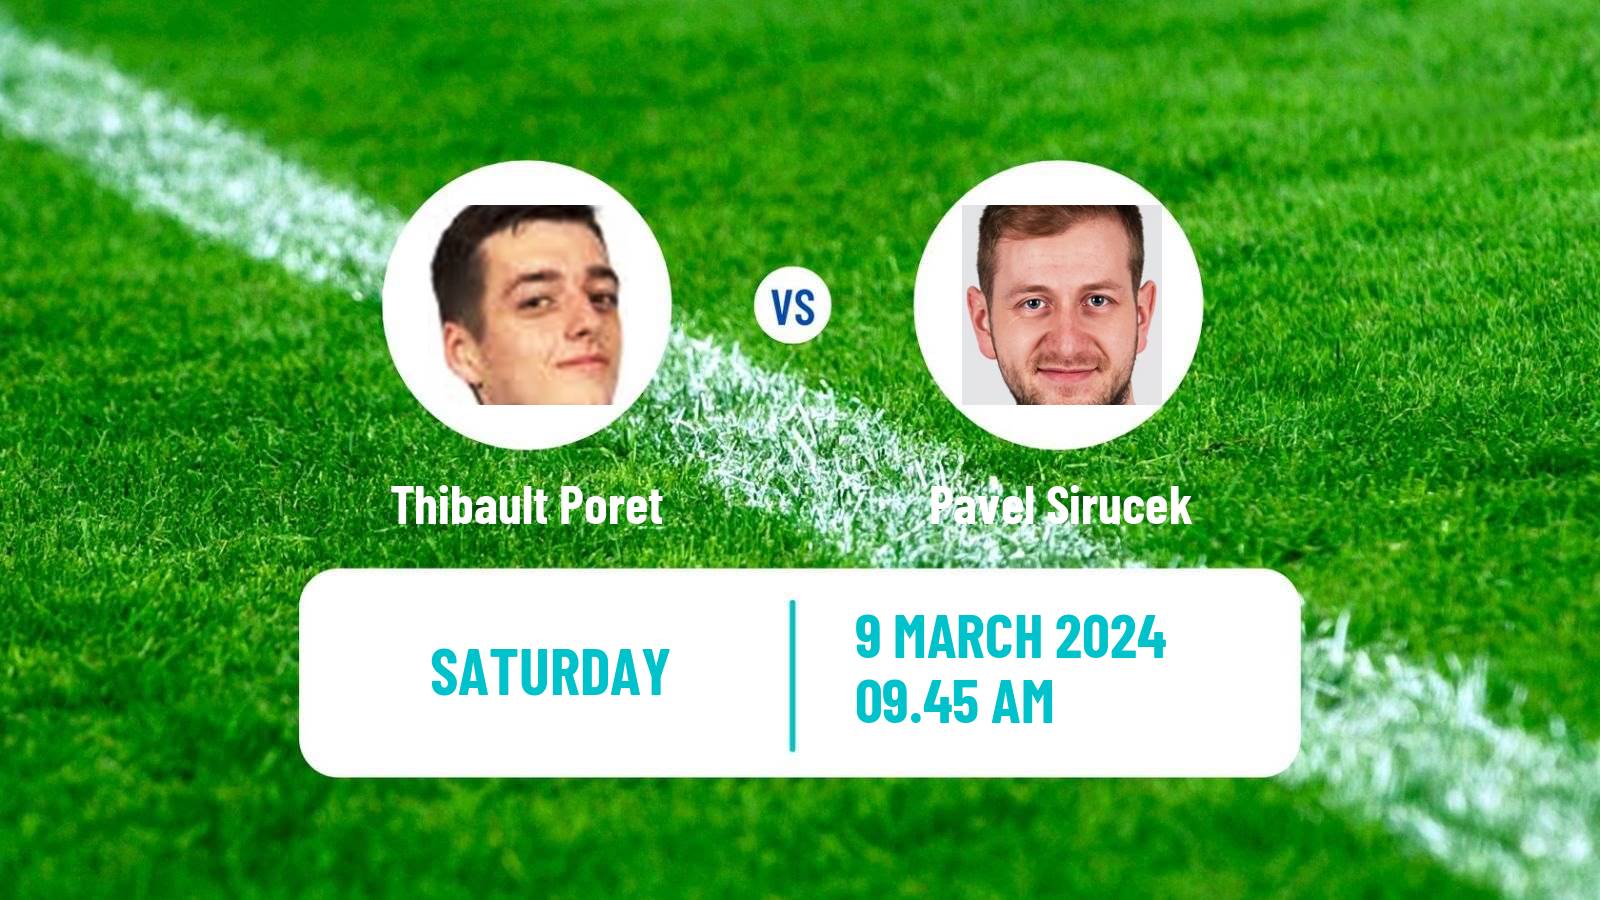 Table tennis Tt Star Series Men Thibault Poret - Pavel Sirucek